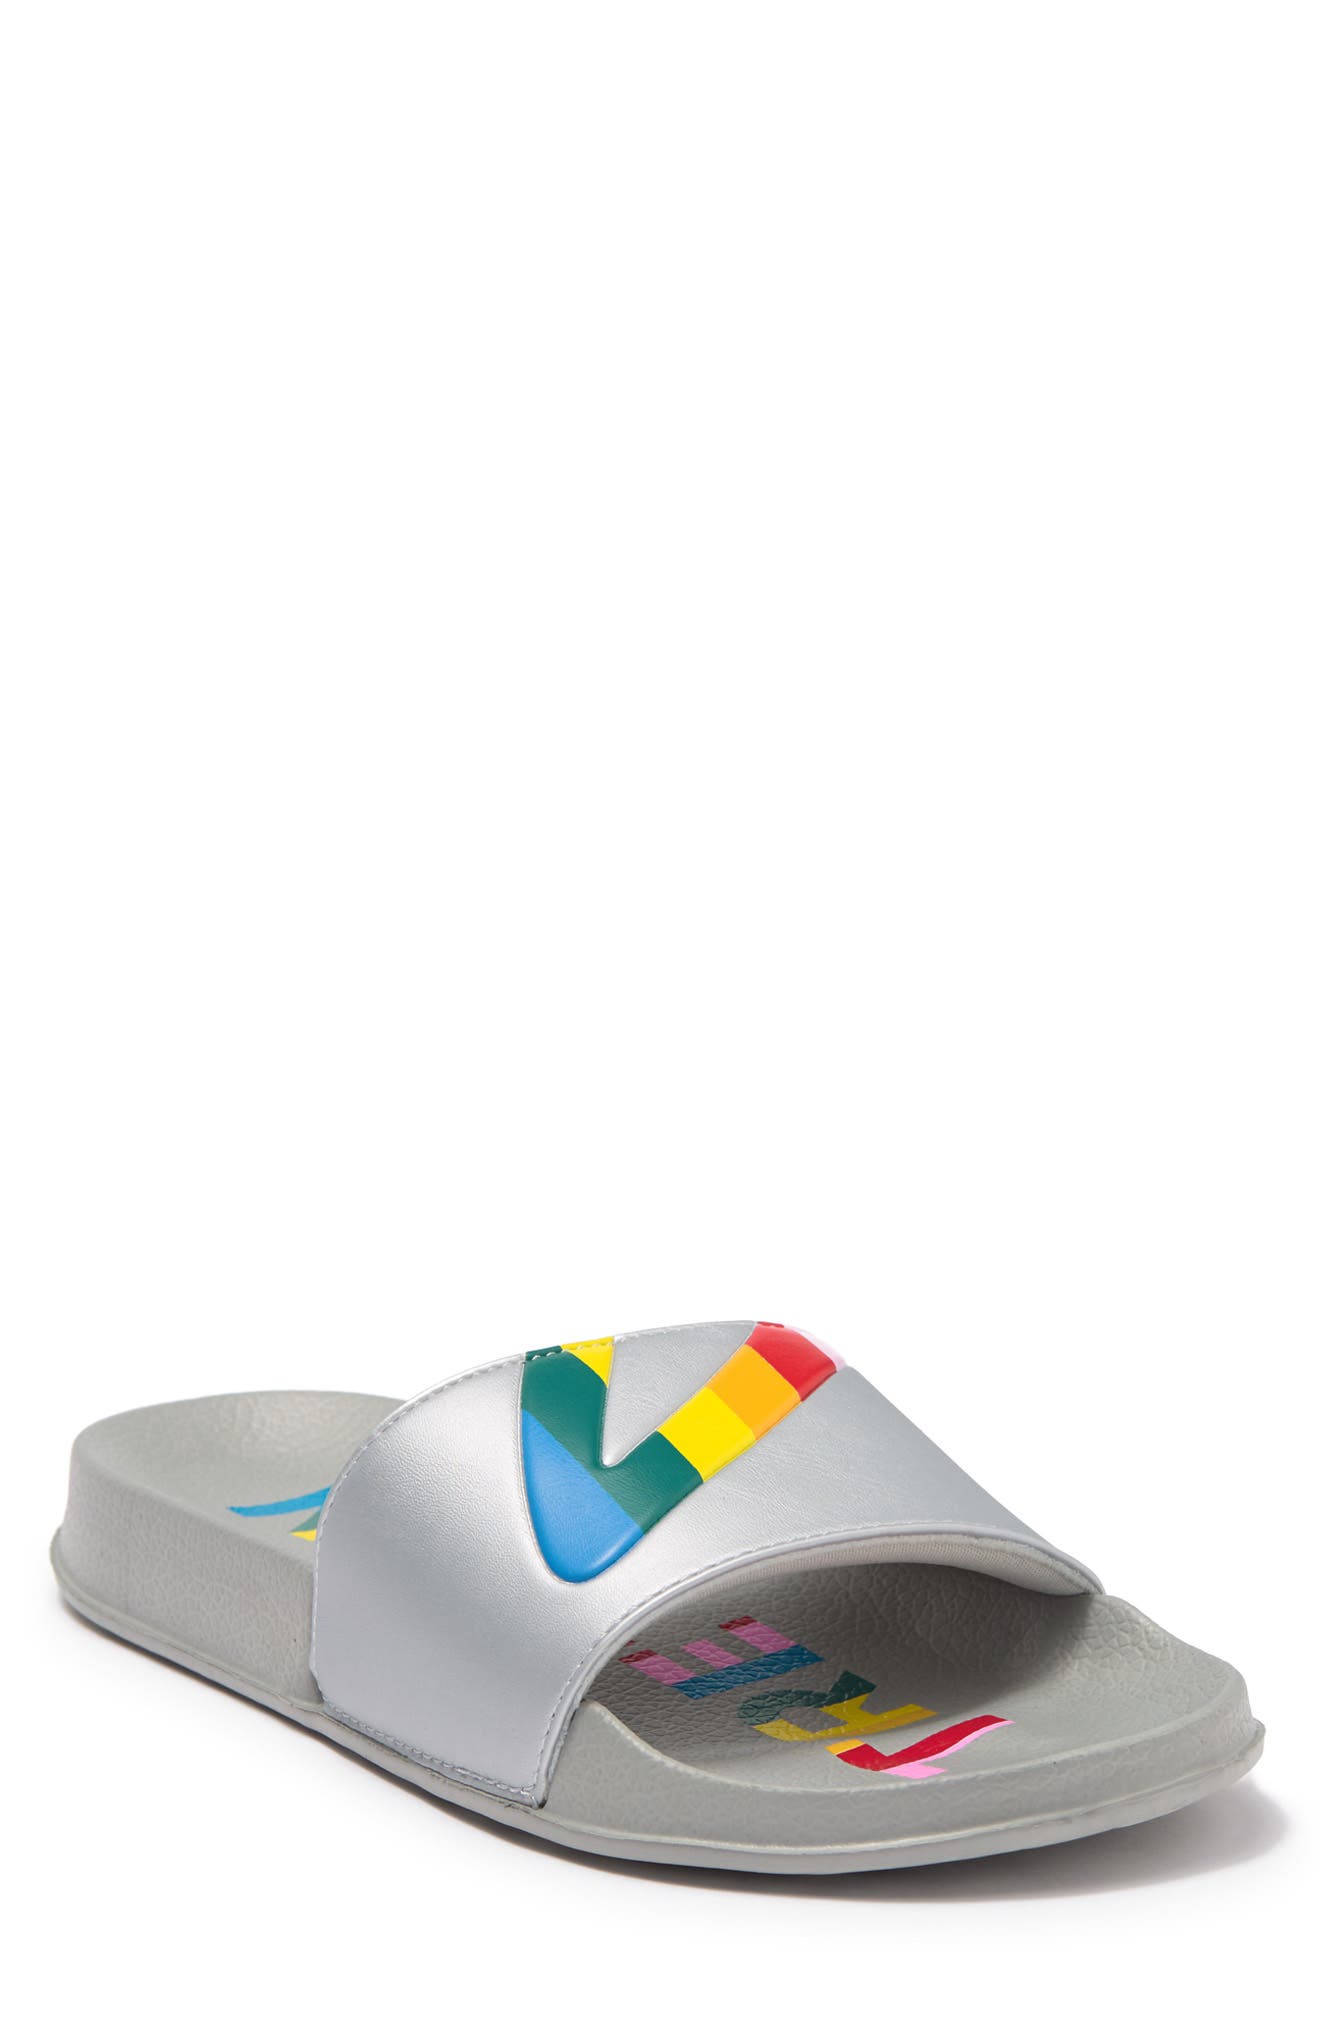 Tretorn Tragrant Slide Sandal In Silver/rainbow